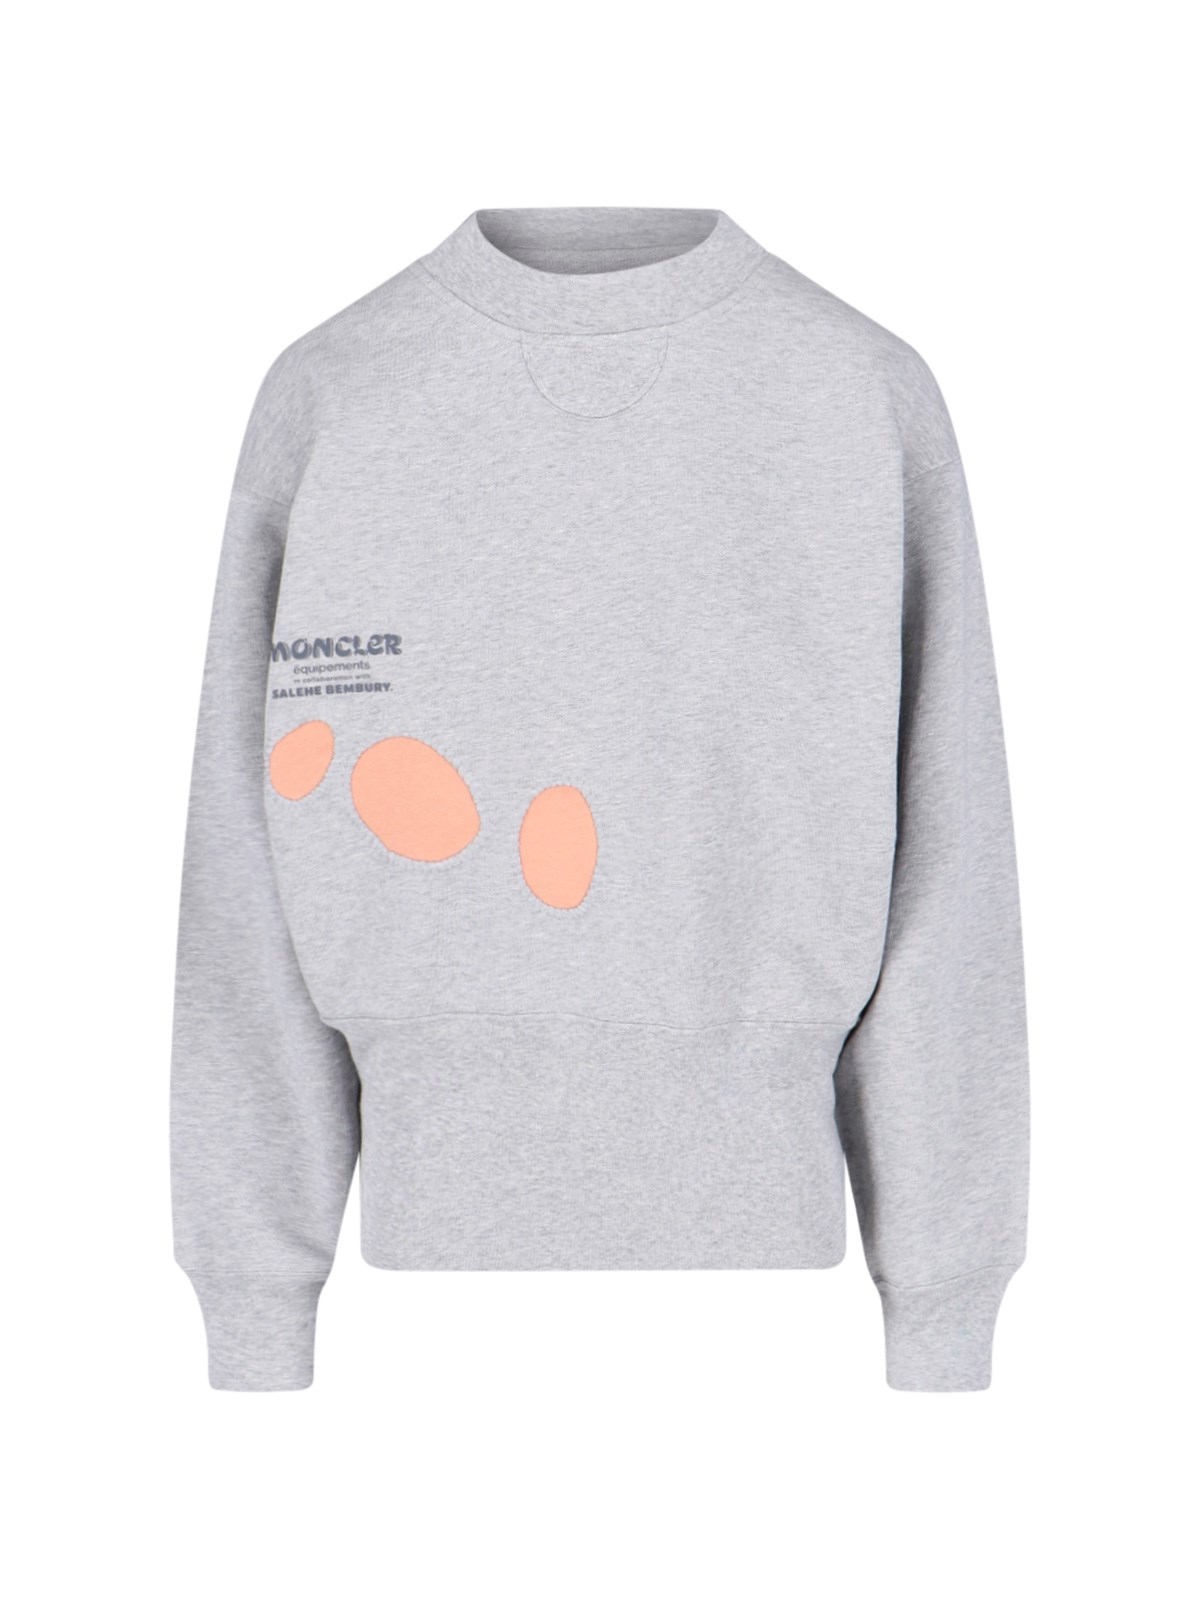 Moncler Genius X Salehe Bembury Crewneck Sweatshirt In Gray